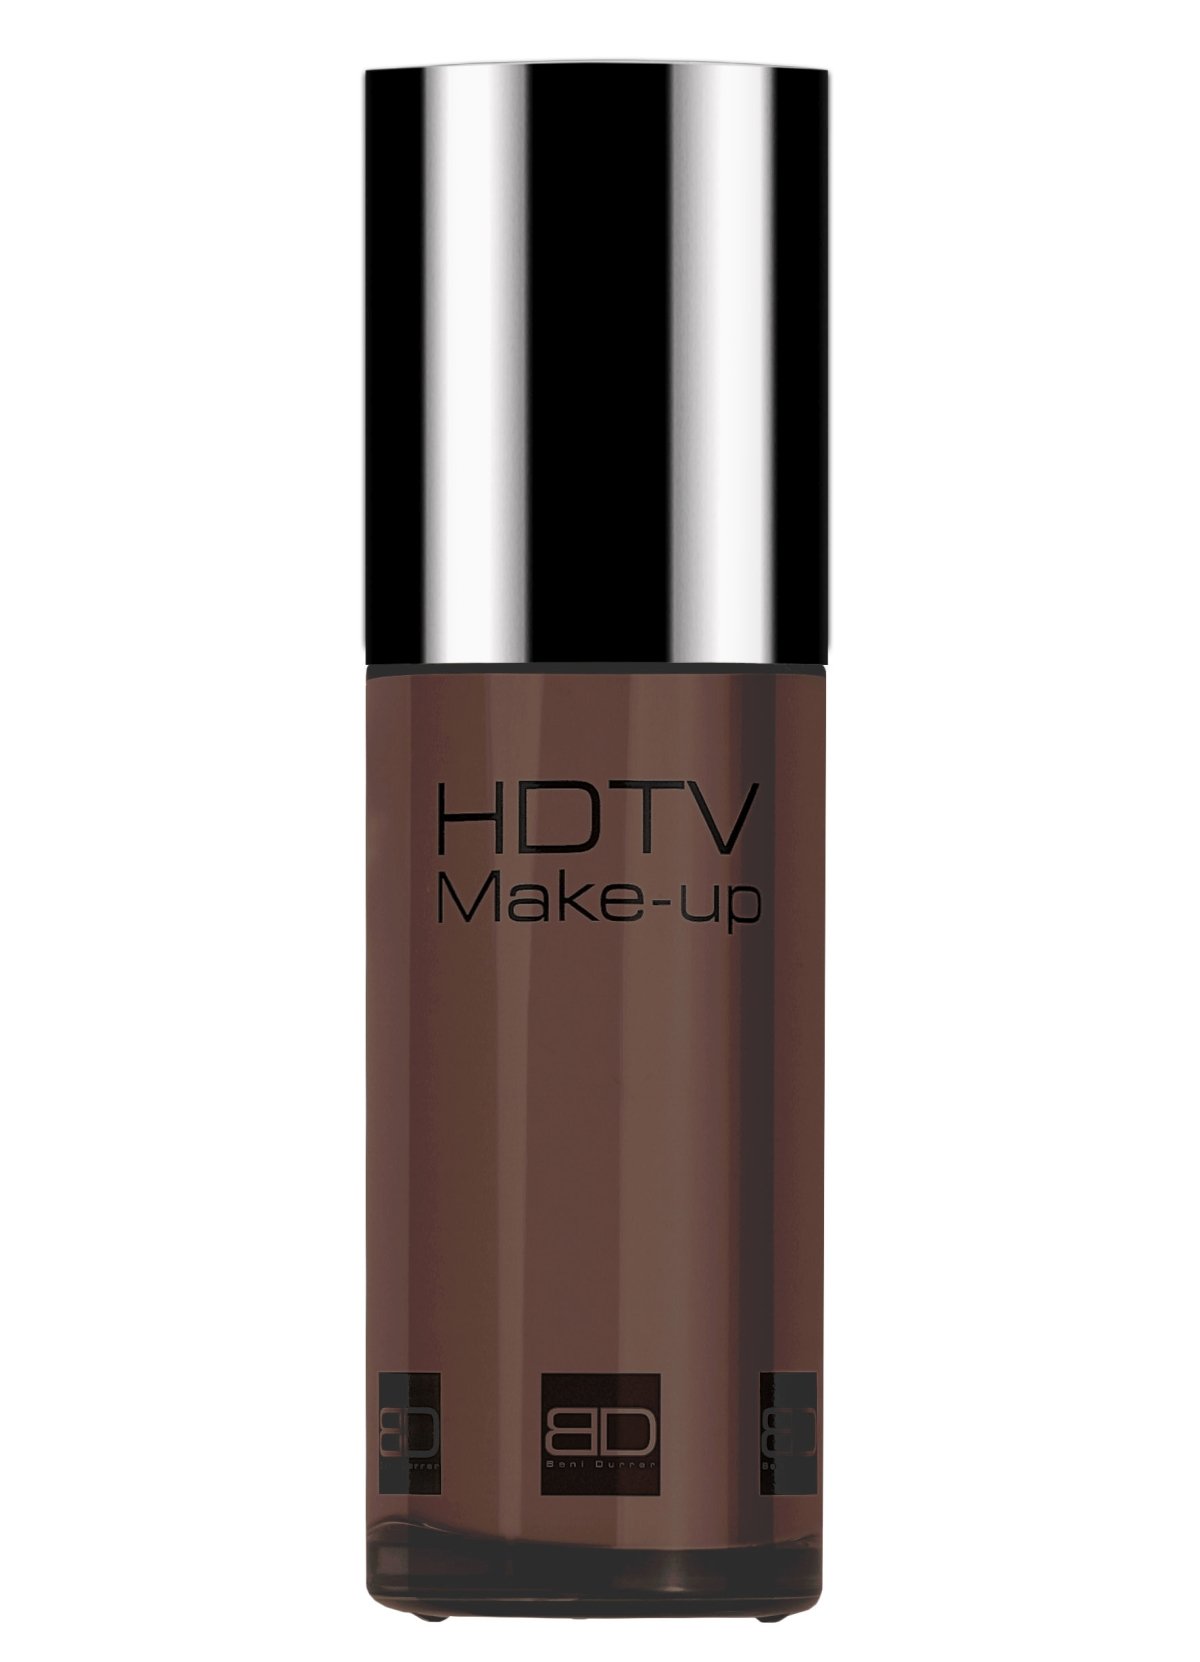 Beni Durrer HDTV Make-up N° 170, roter Ton, 30 g